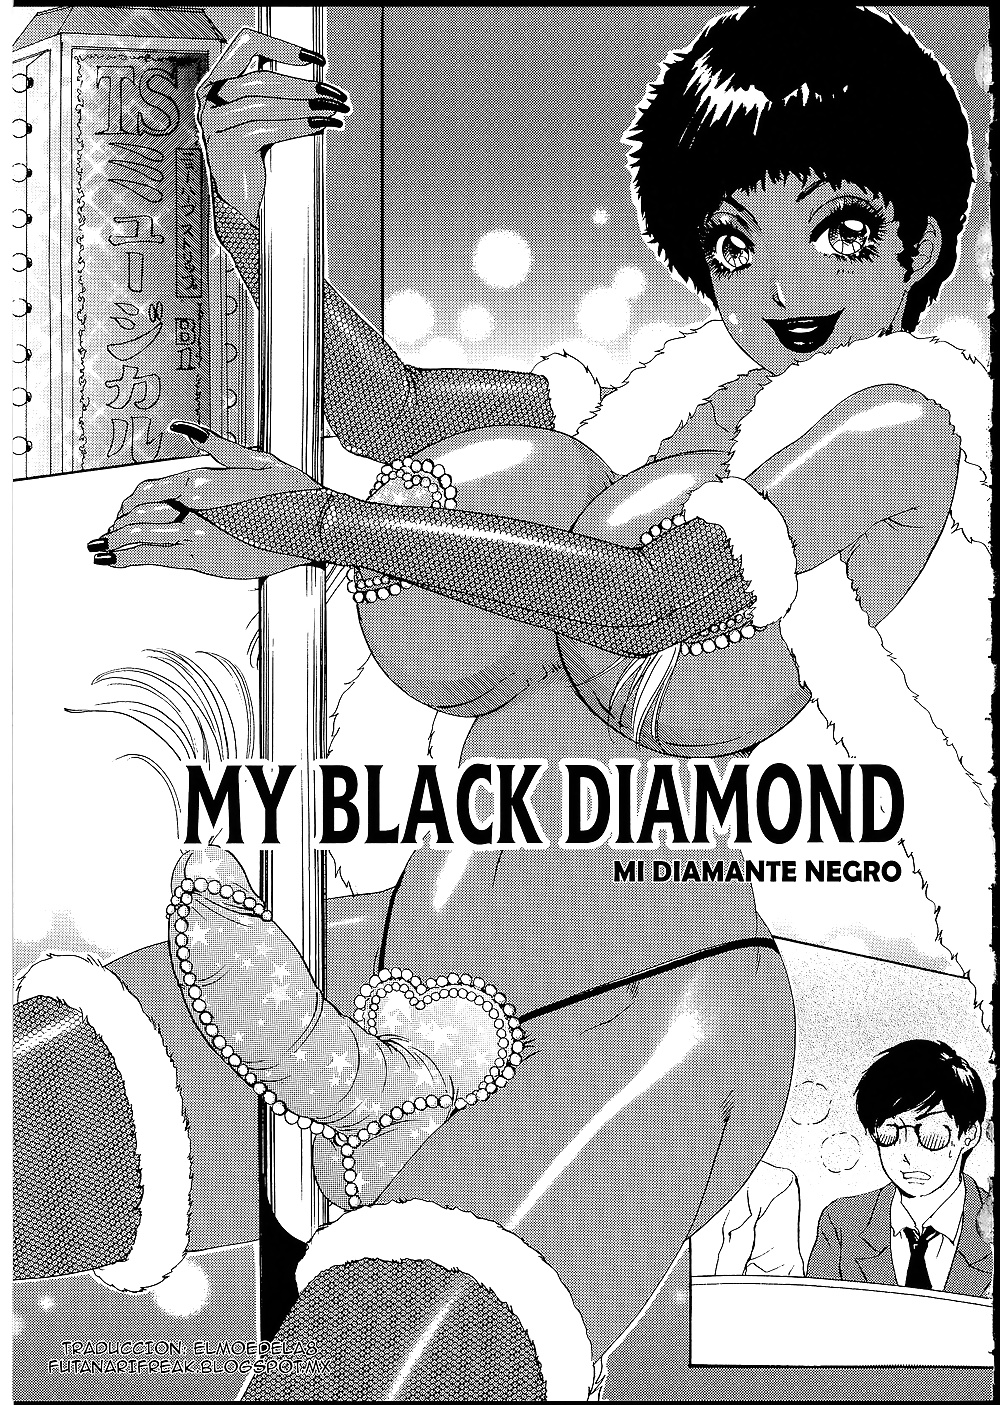 My black diamond #38611678